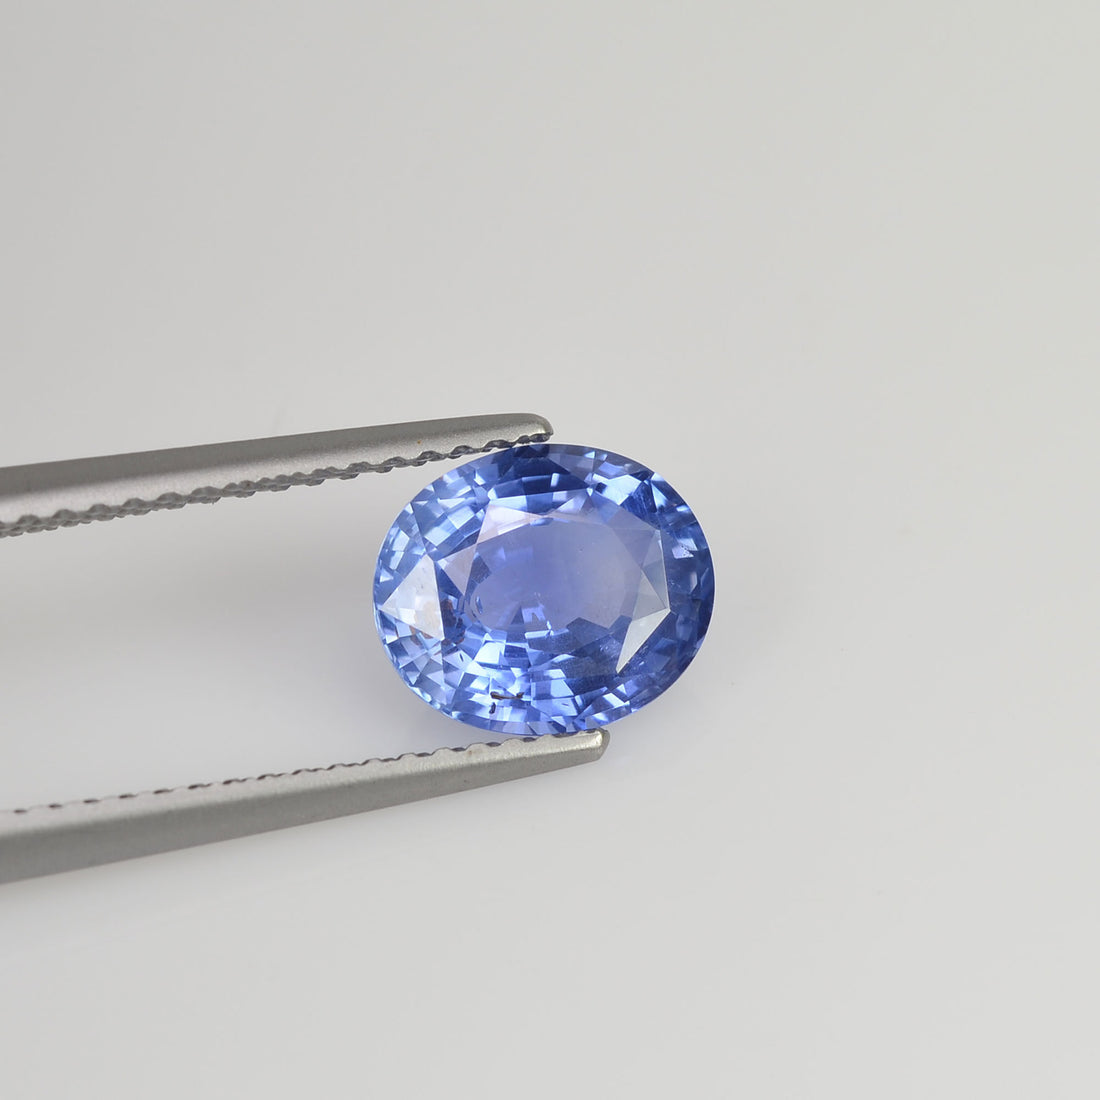 1.97 cts Unheated Natural Blue Sapphire Loose Gemstone Oval Cut - Thai Gems Export Ltd.